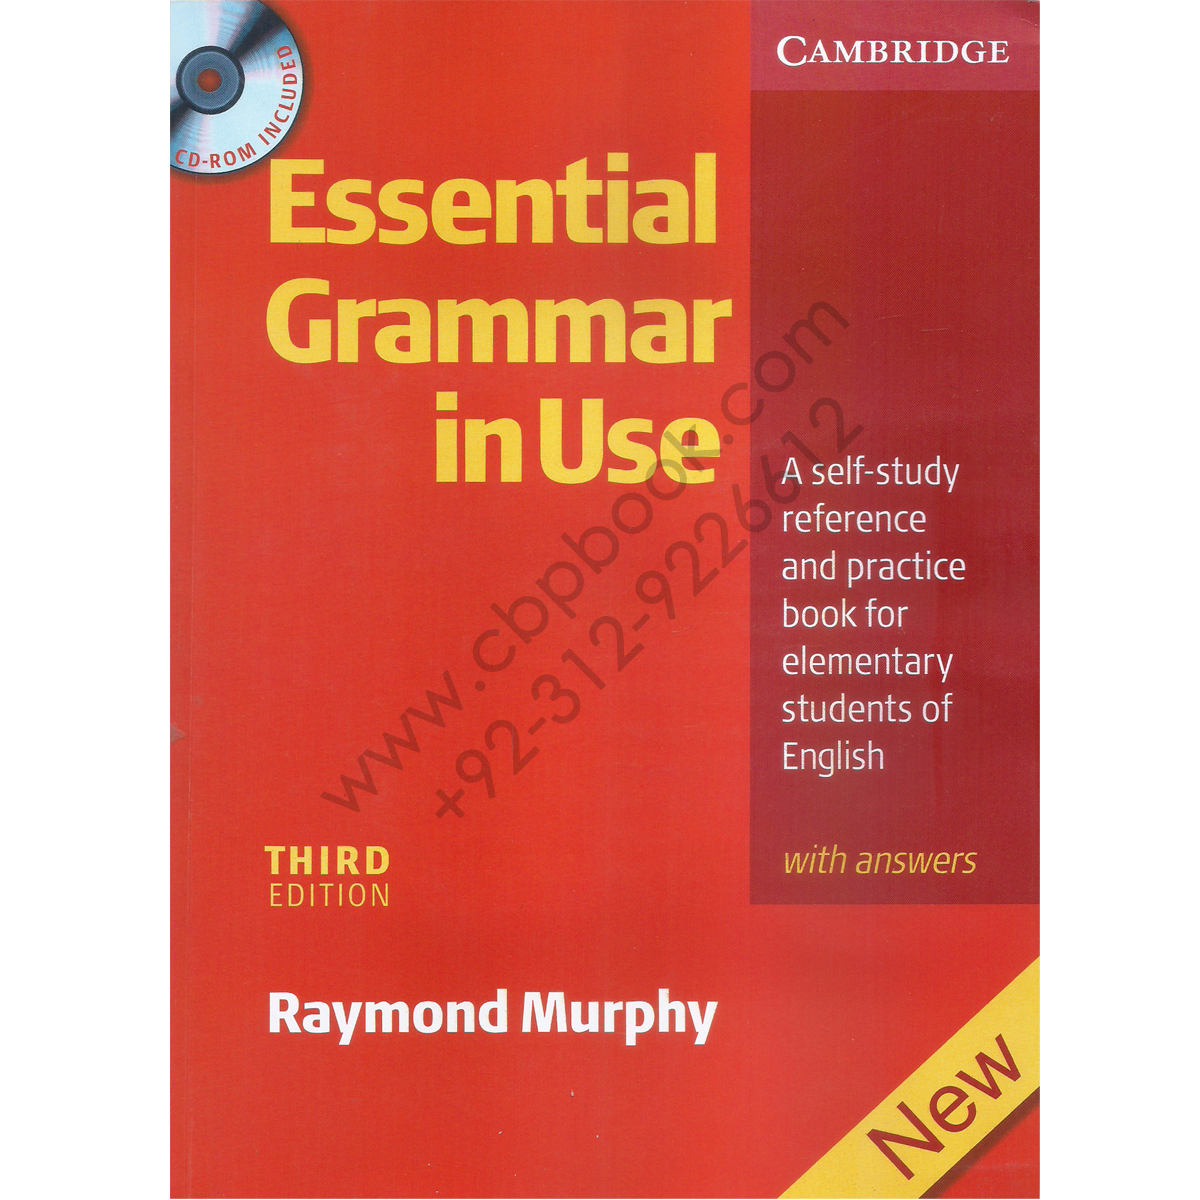 essential english grammar by raymond murphy free pdf